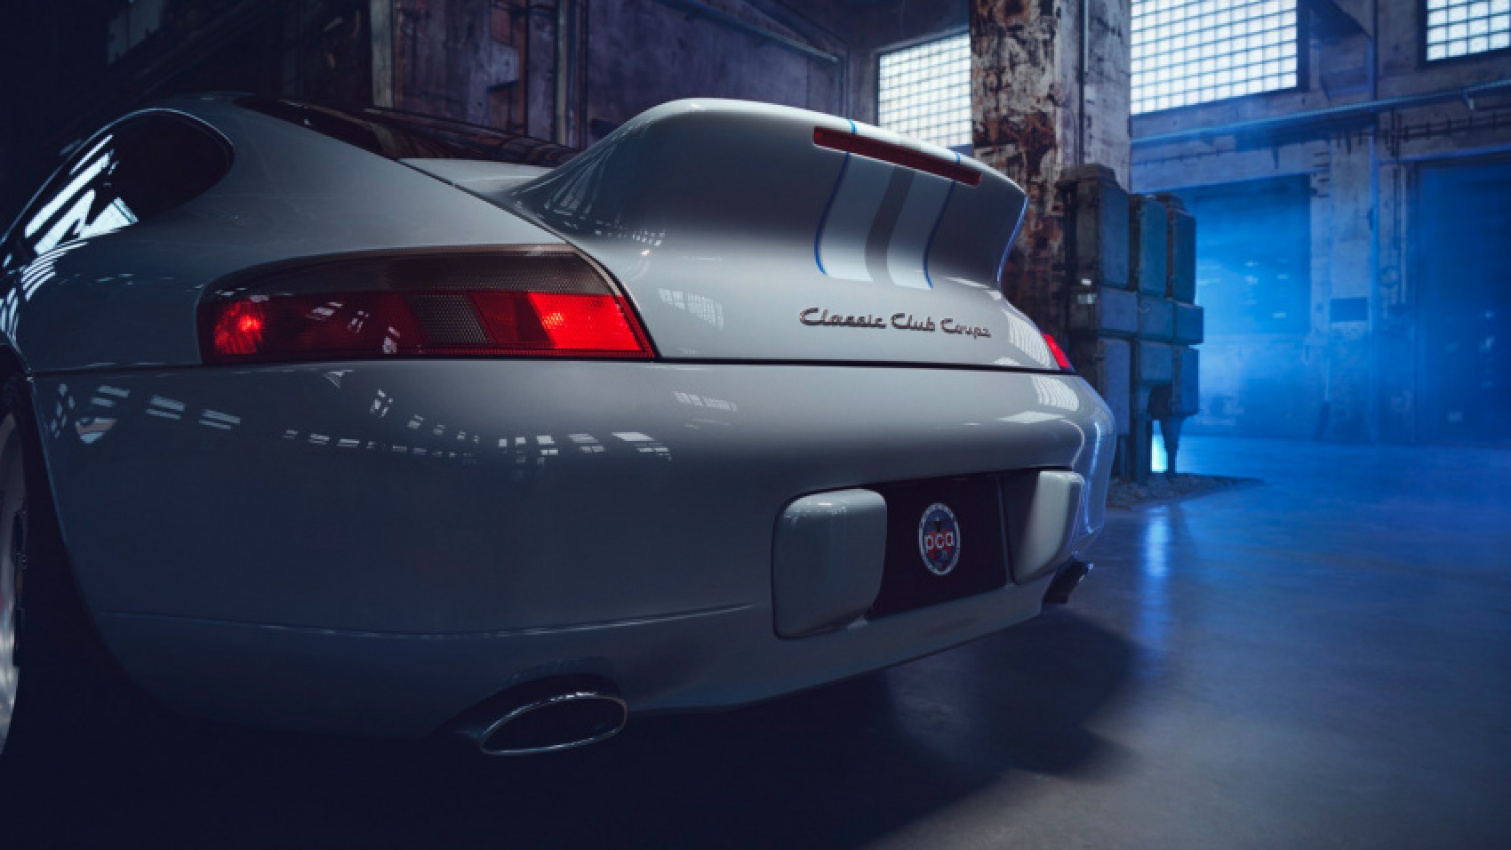 autos, car news, cars, news, porsche, android, classic cars, porsche 911, porsche classic, sports cars, android, porsche 911 classic club coupe 996 revealed